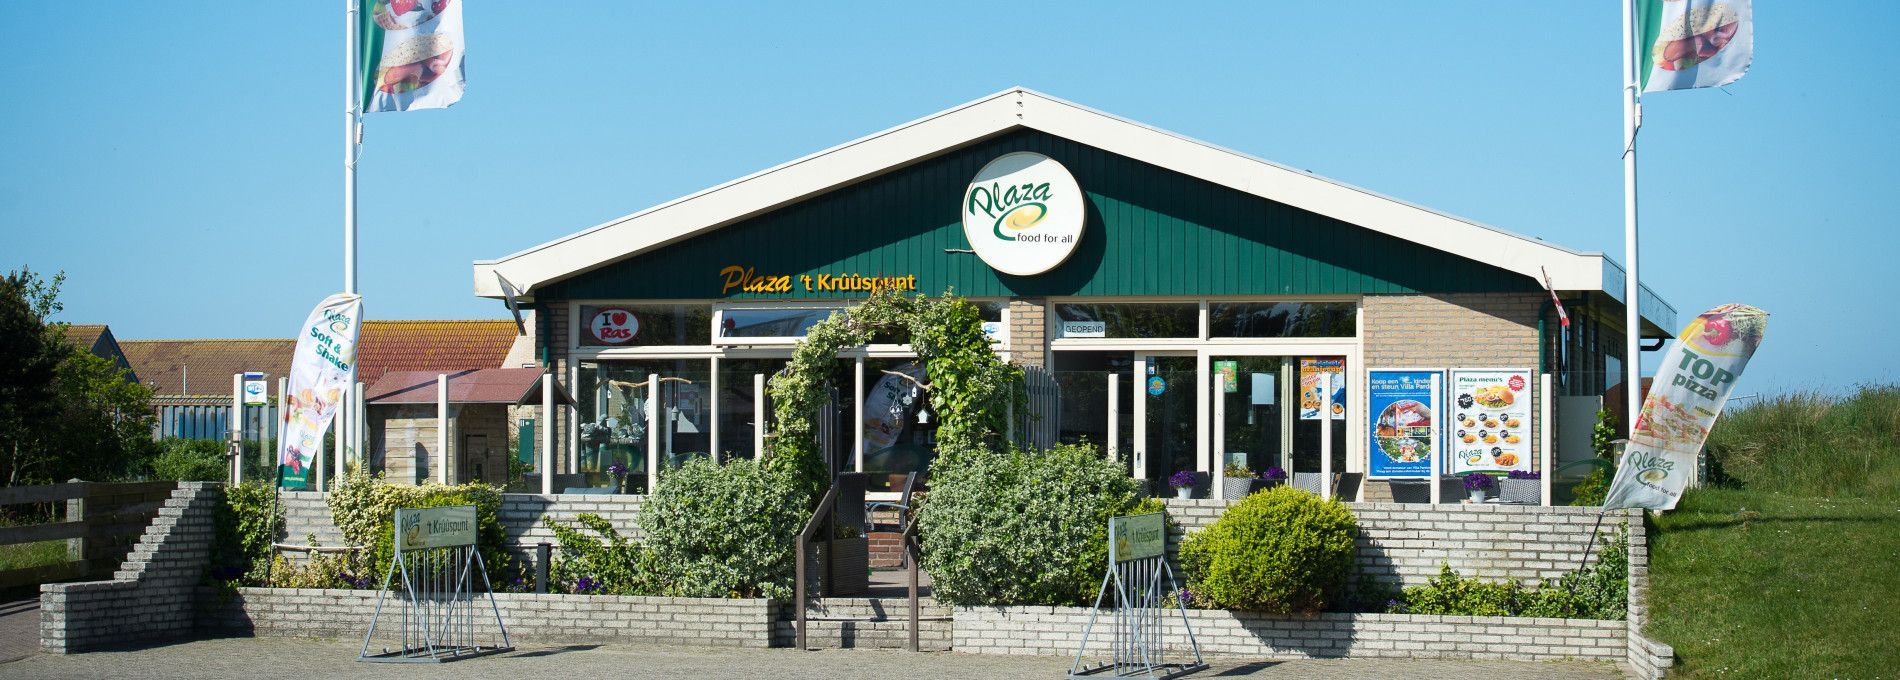 Cafetaria Plaza 't Kruuspunt - Tourist Information “VVV”Ameland